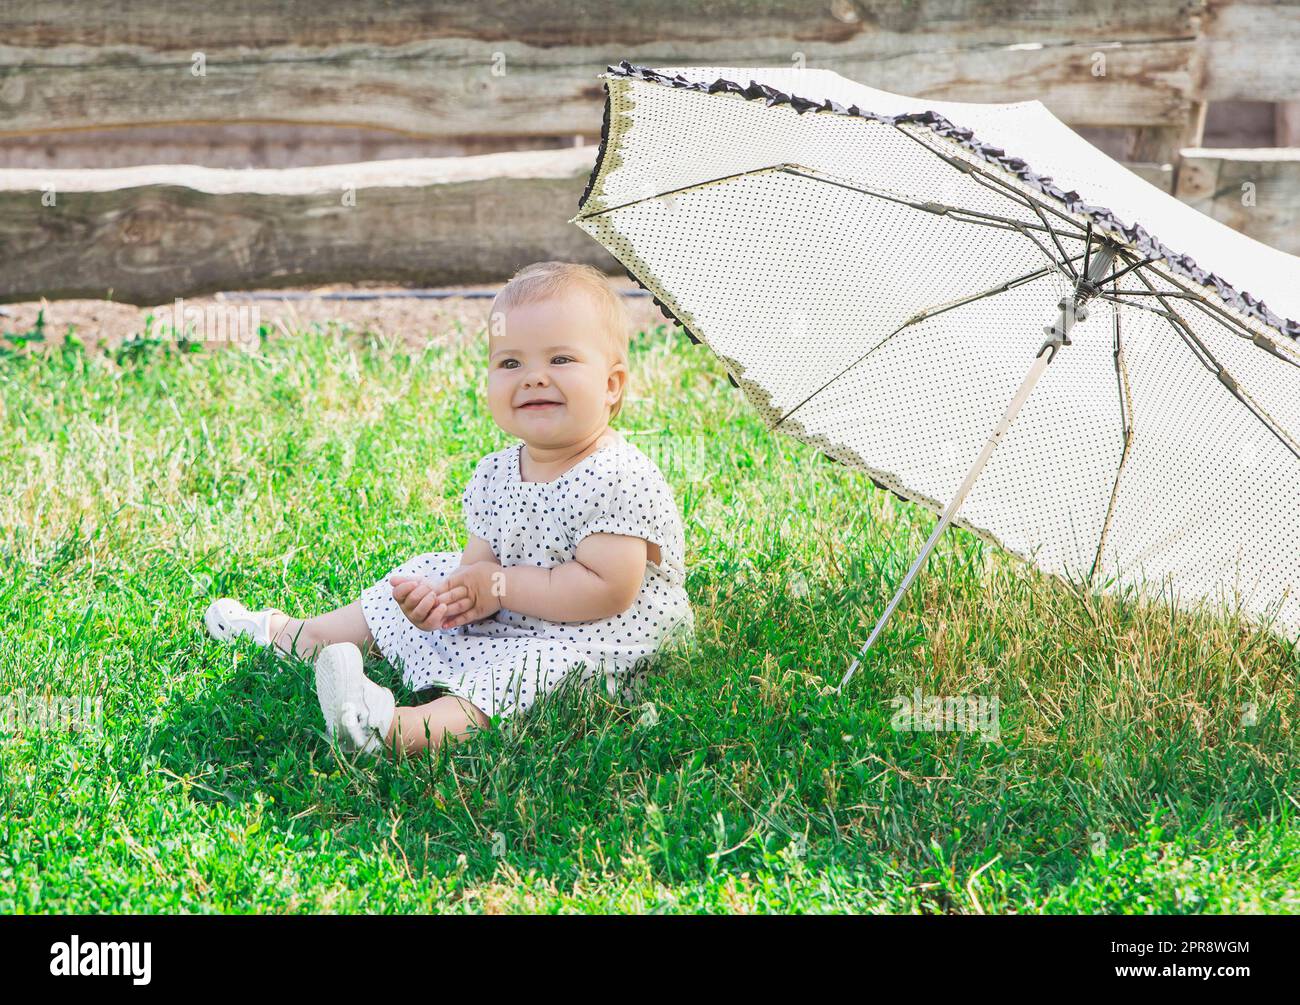 beautiful baby in a polka-dot dress is sitting nea umbrella umbrella Stock Photo